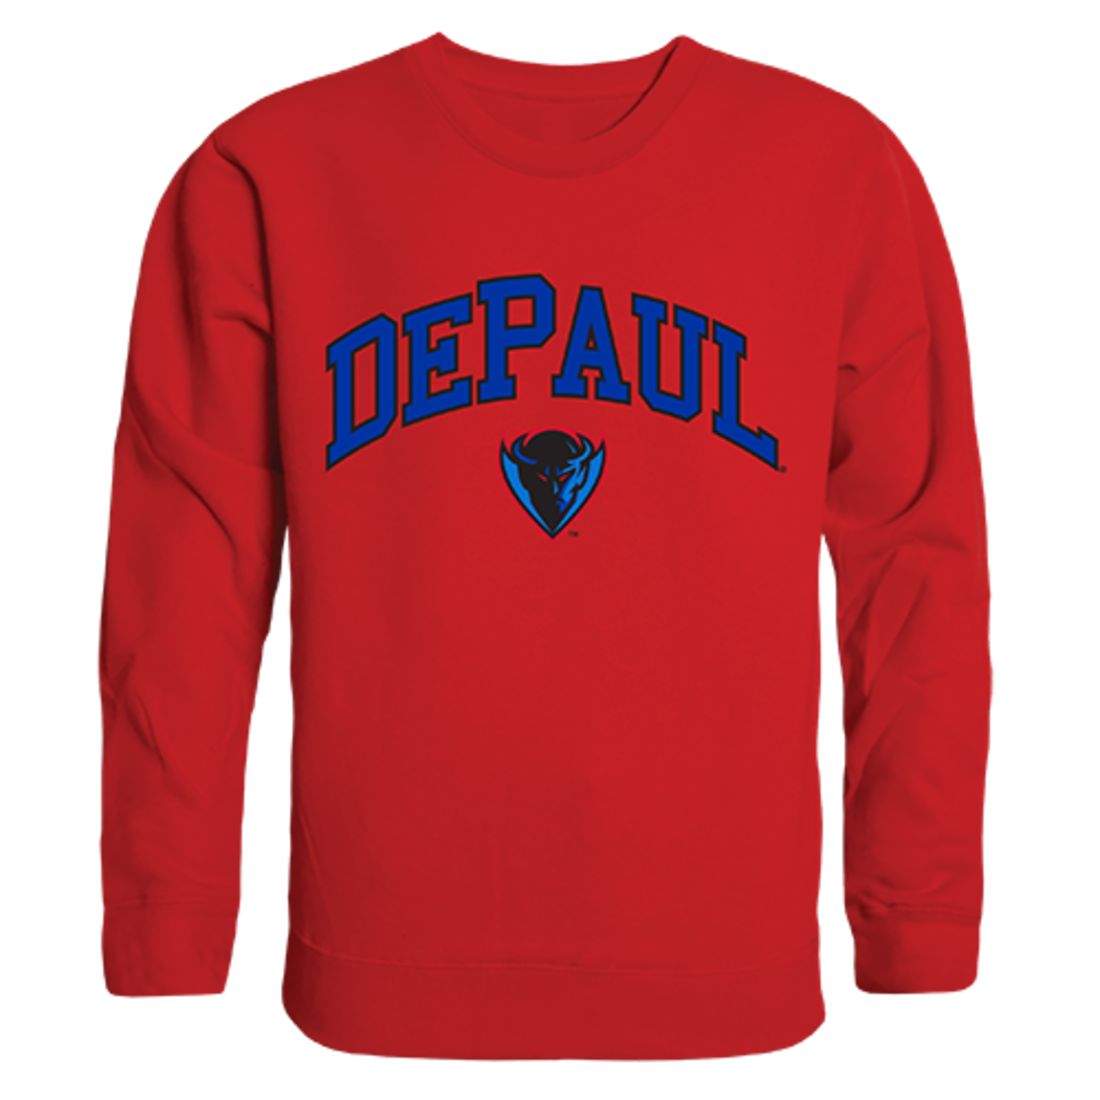 DePaul University Campus Crewneck Pullover Sweatshirt Sweater Red-Campus-Wardrobe